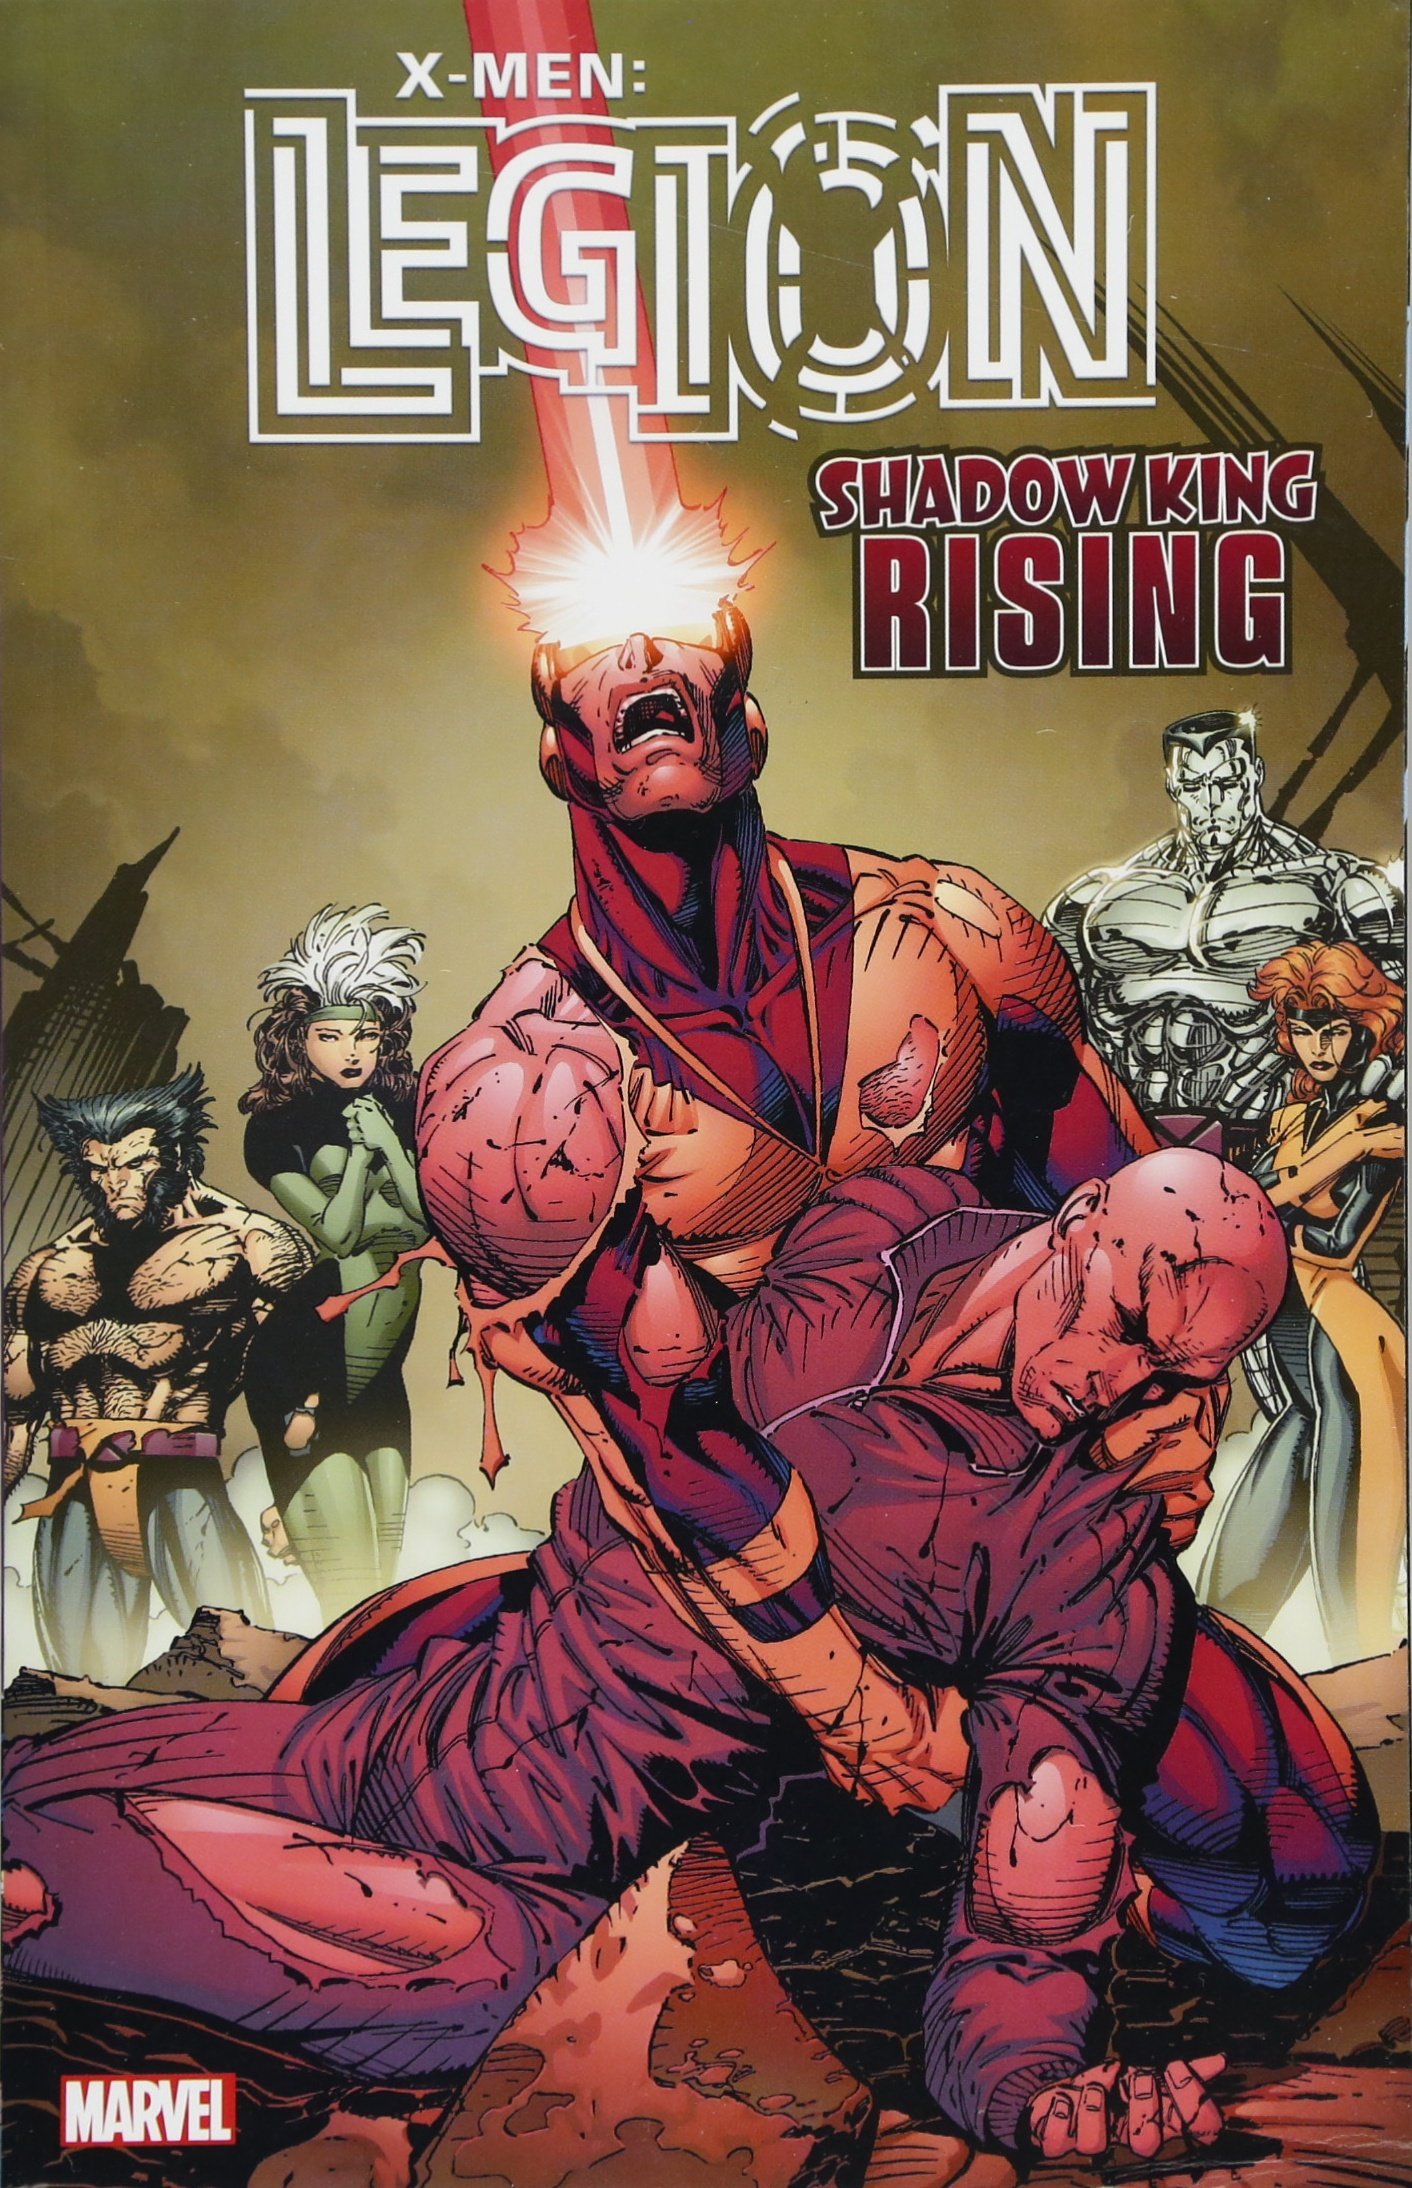 X-Men Legion: Shadow King Rising TP